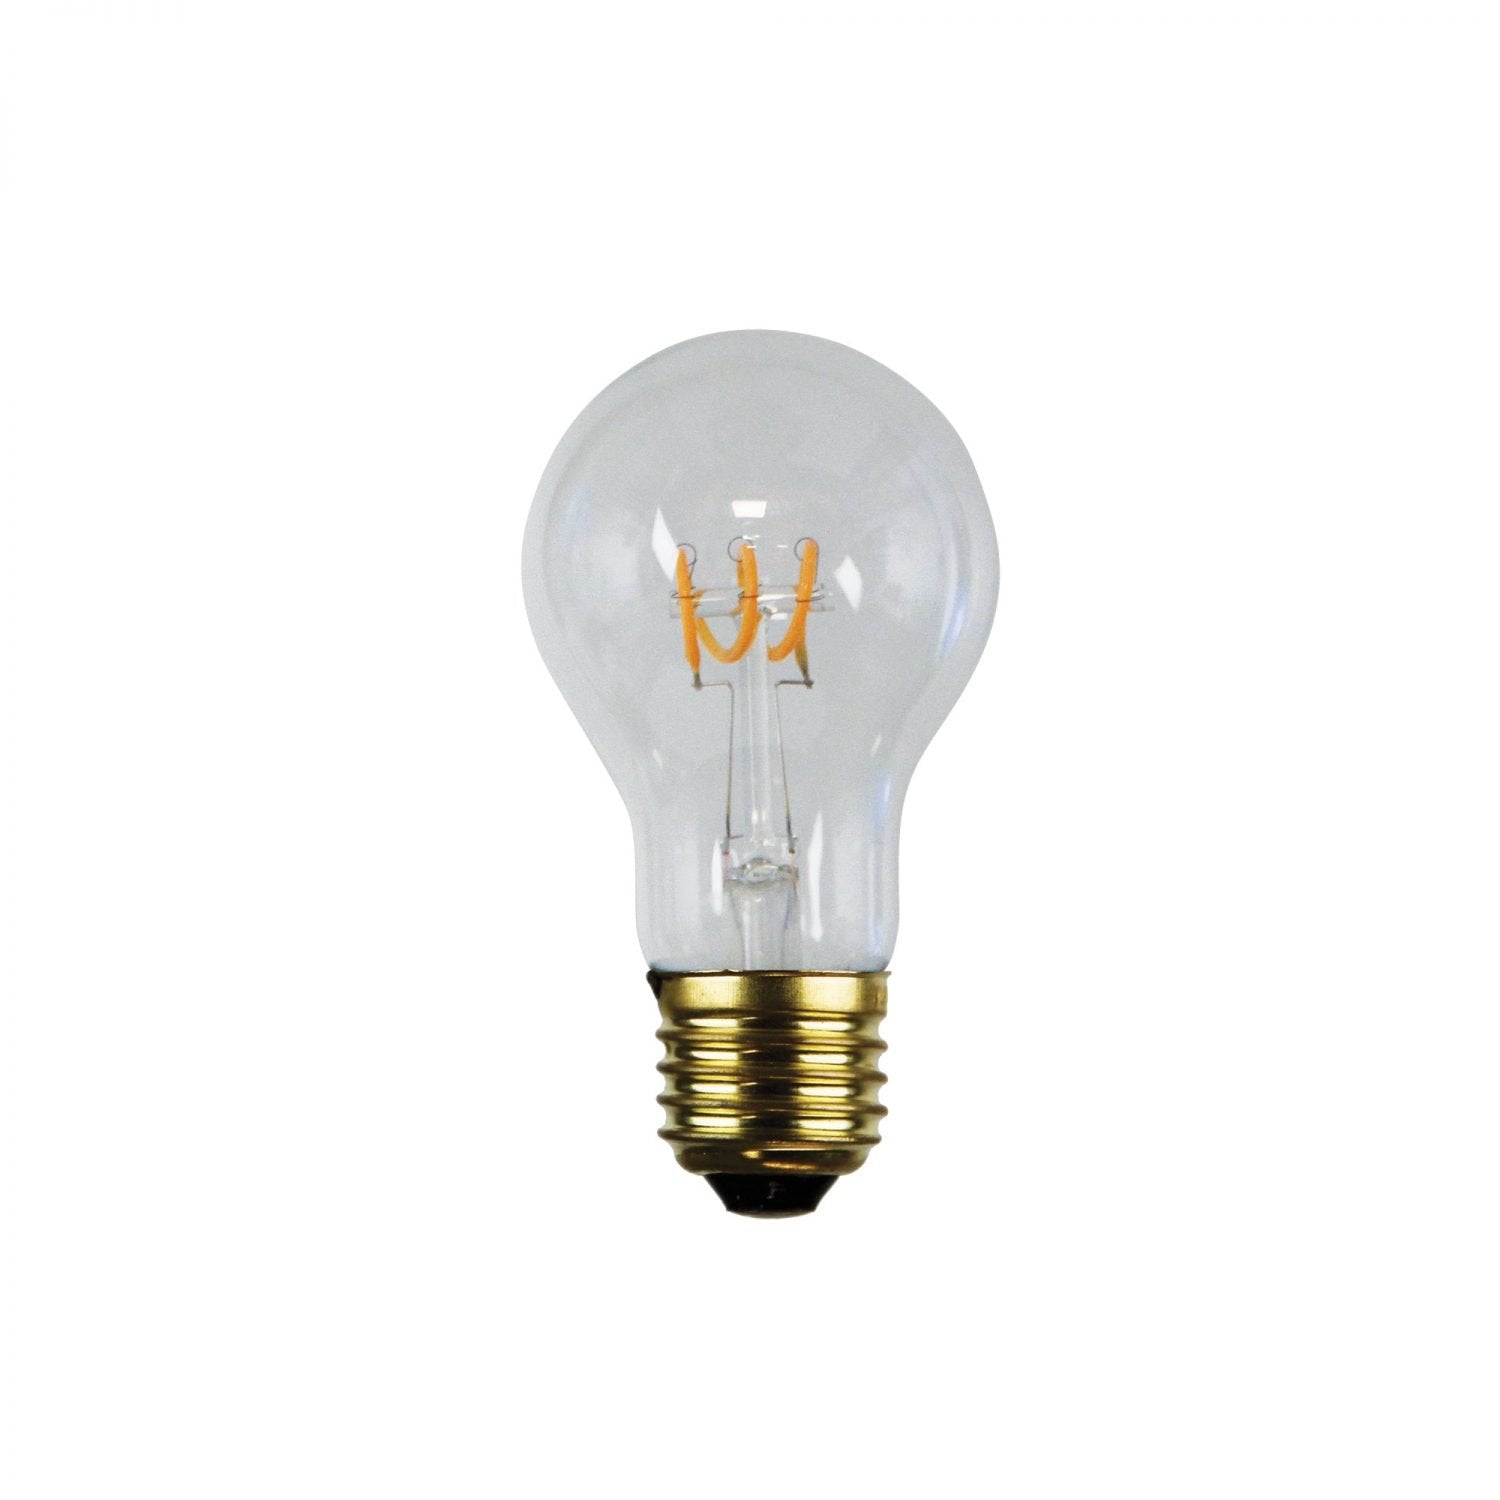 Filament LED A60 Spiral E27 Globe - A-LED-21203222